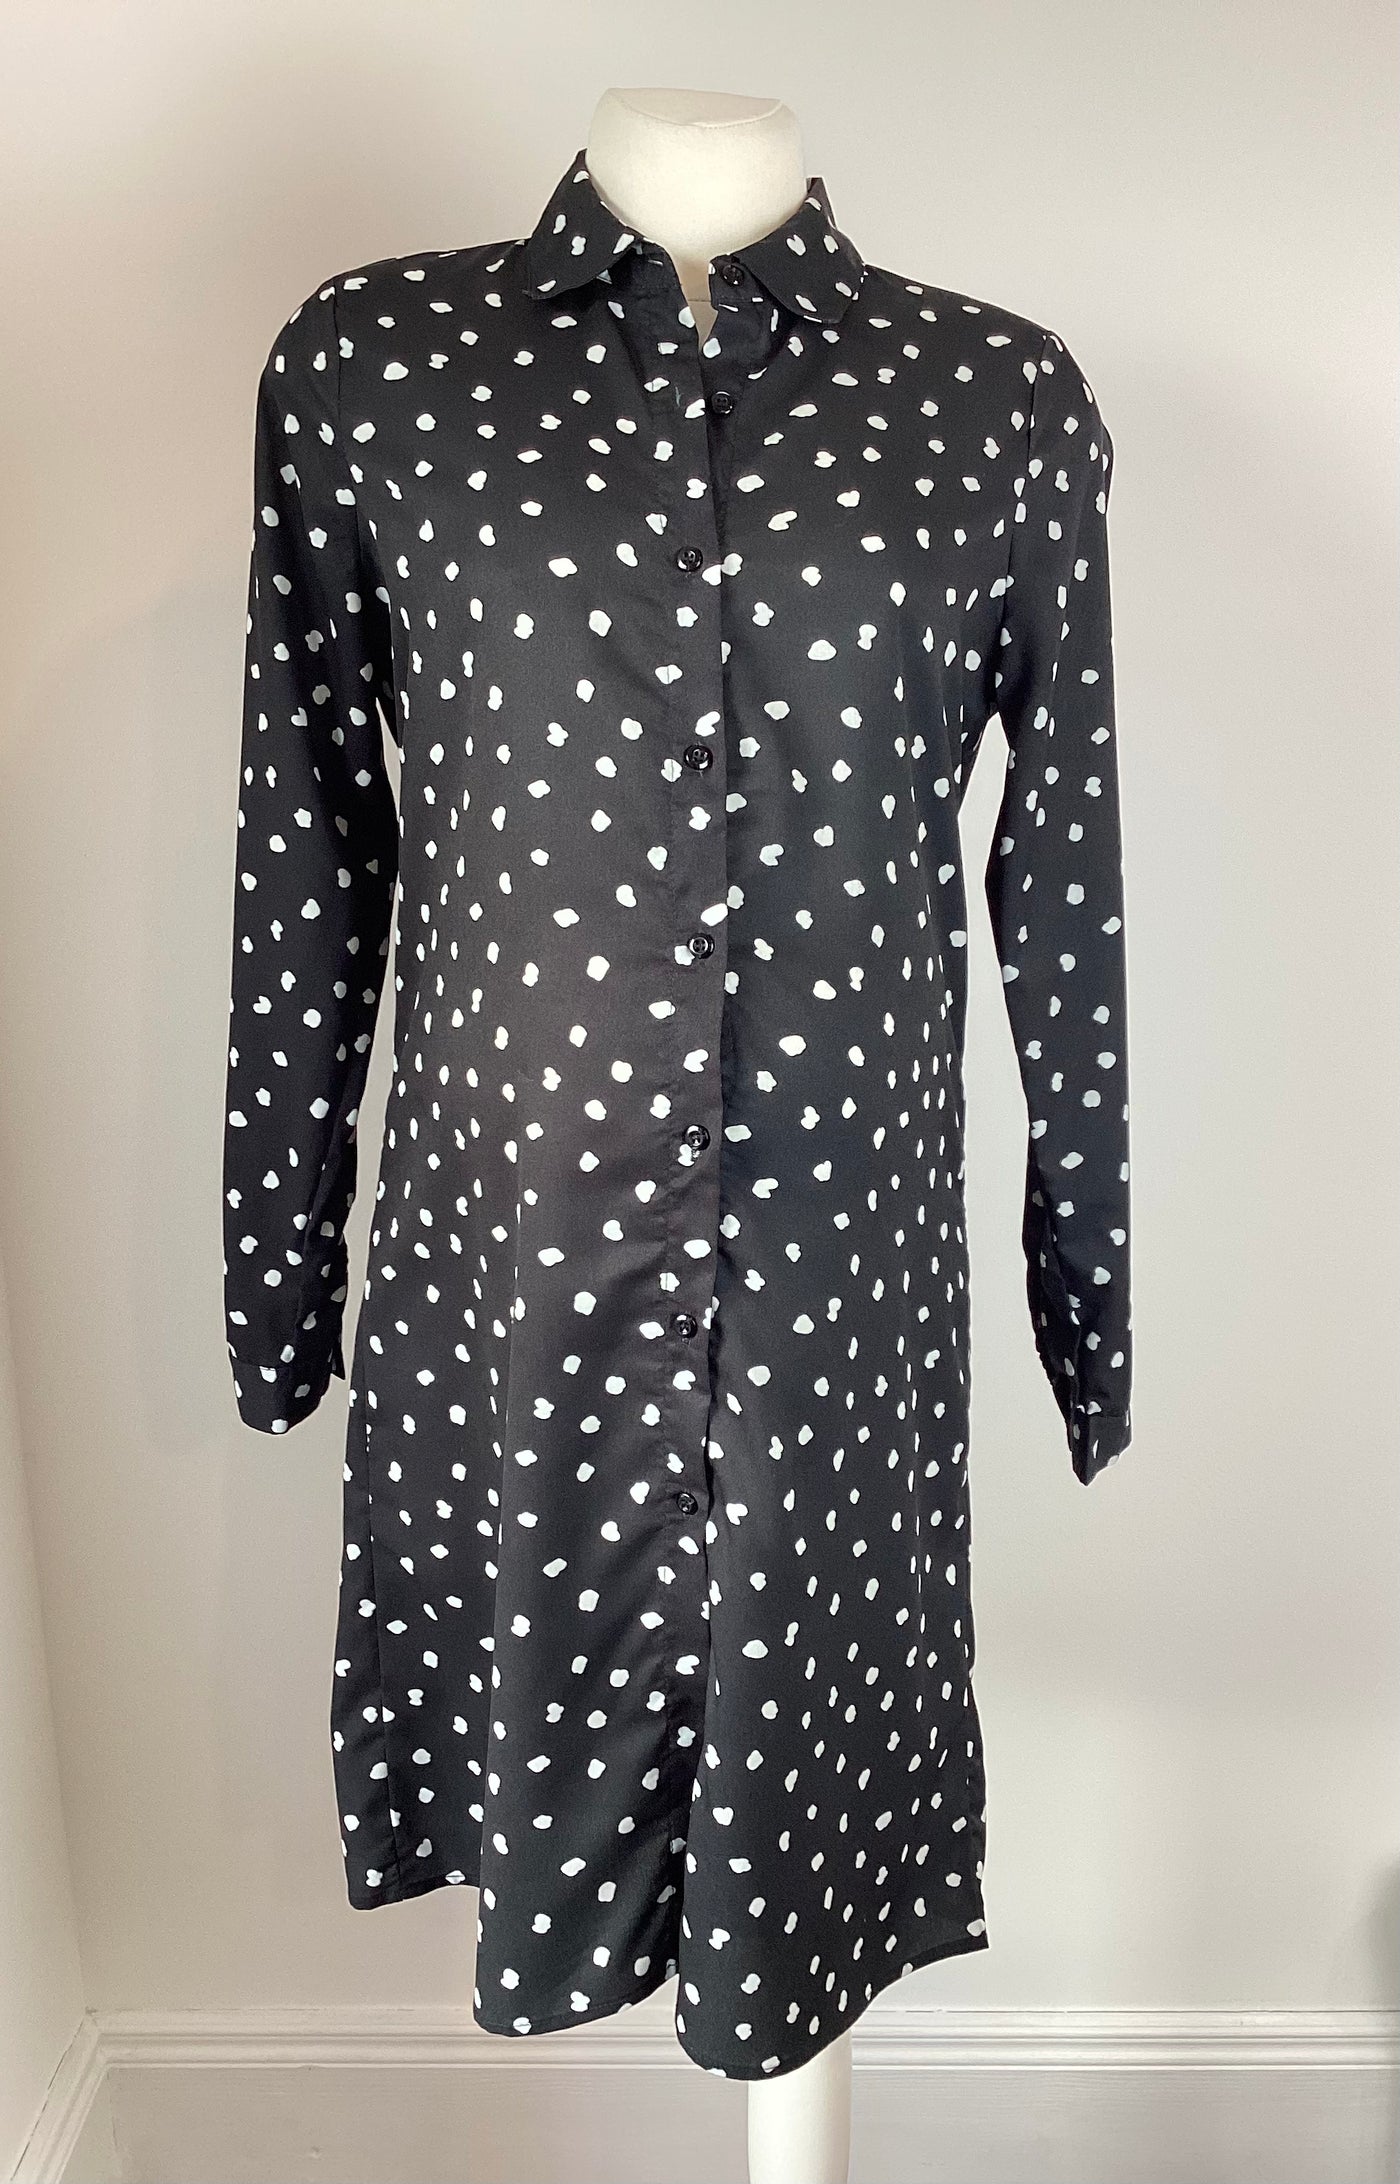 Boohoo black & white print button front shirt dress - Size 10